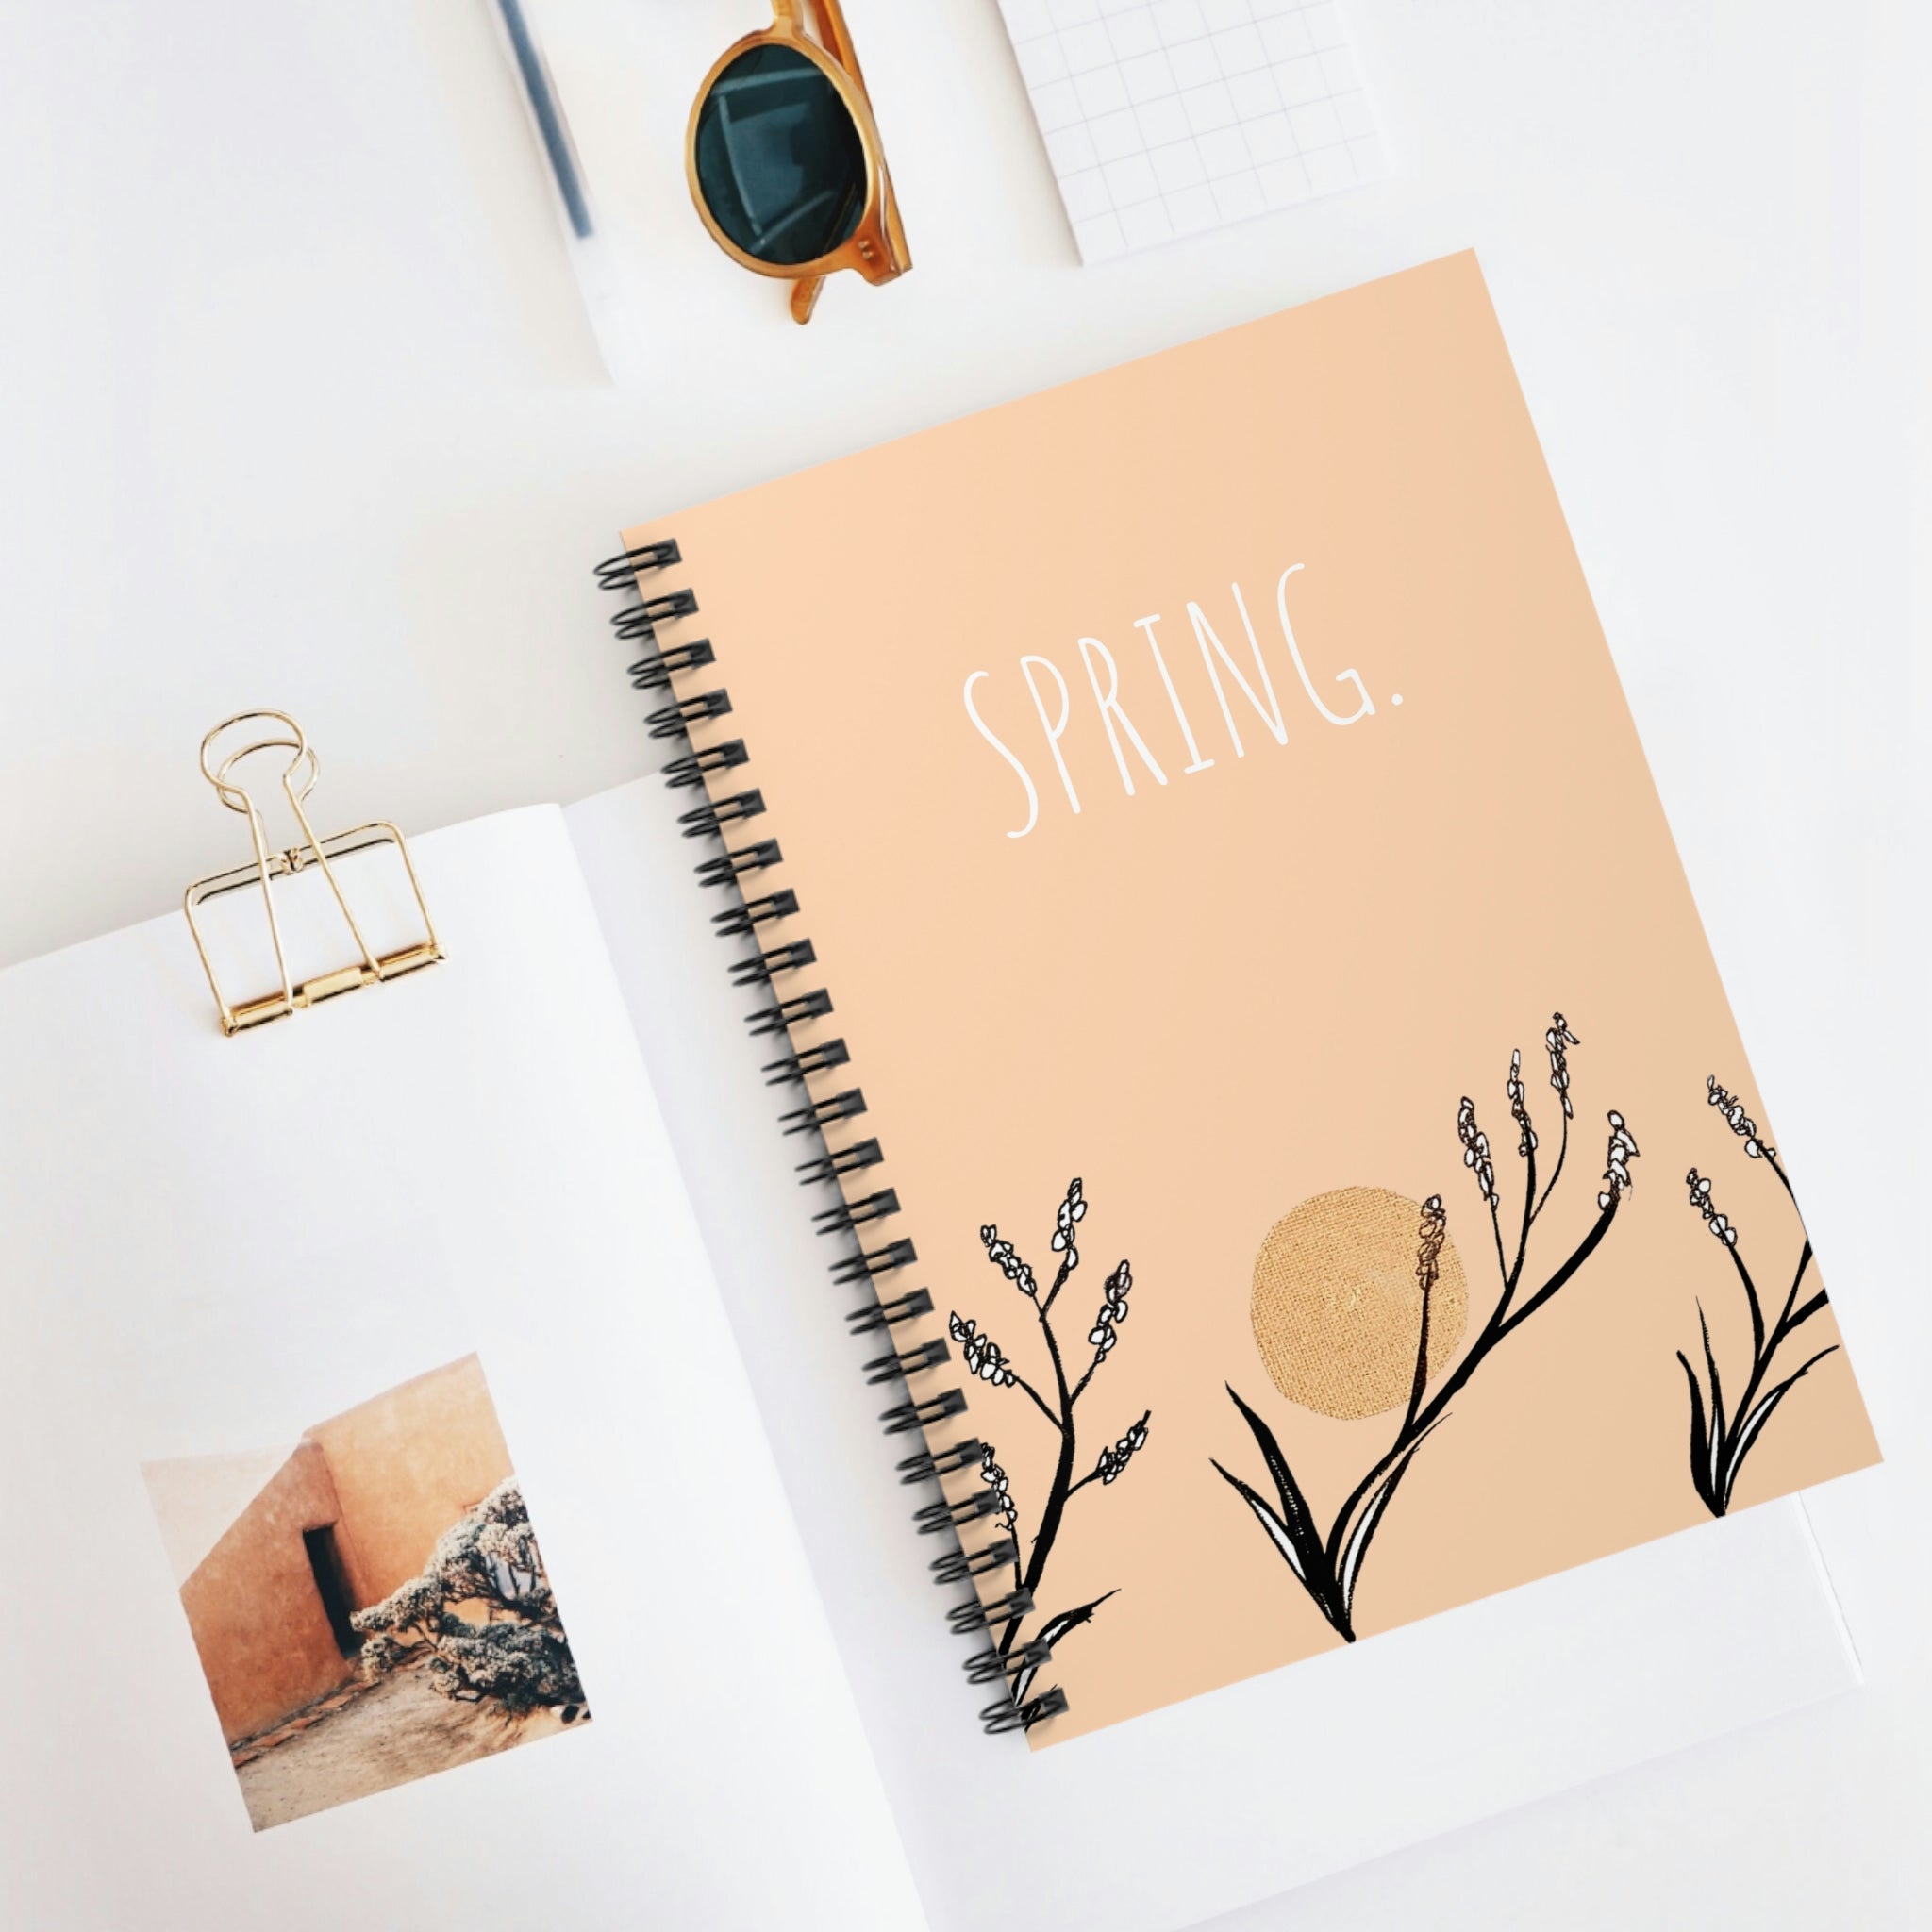 Spring (Notebook)